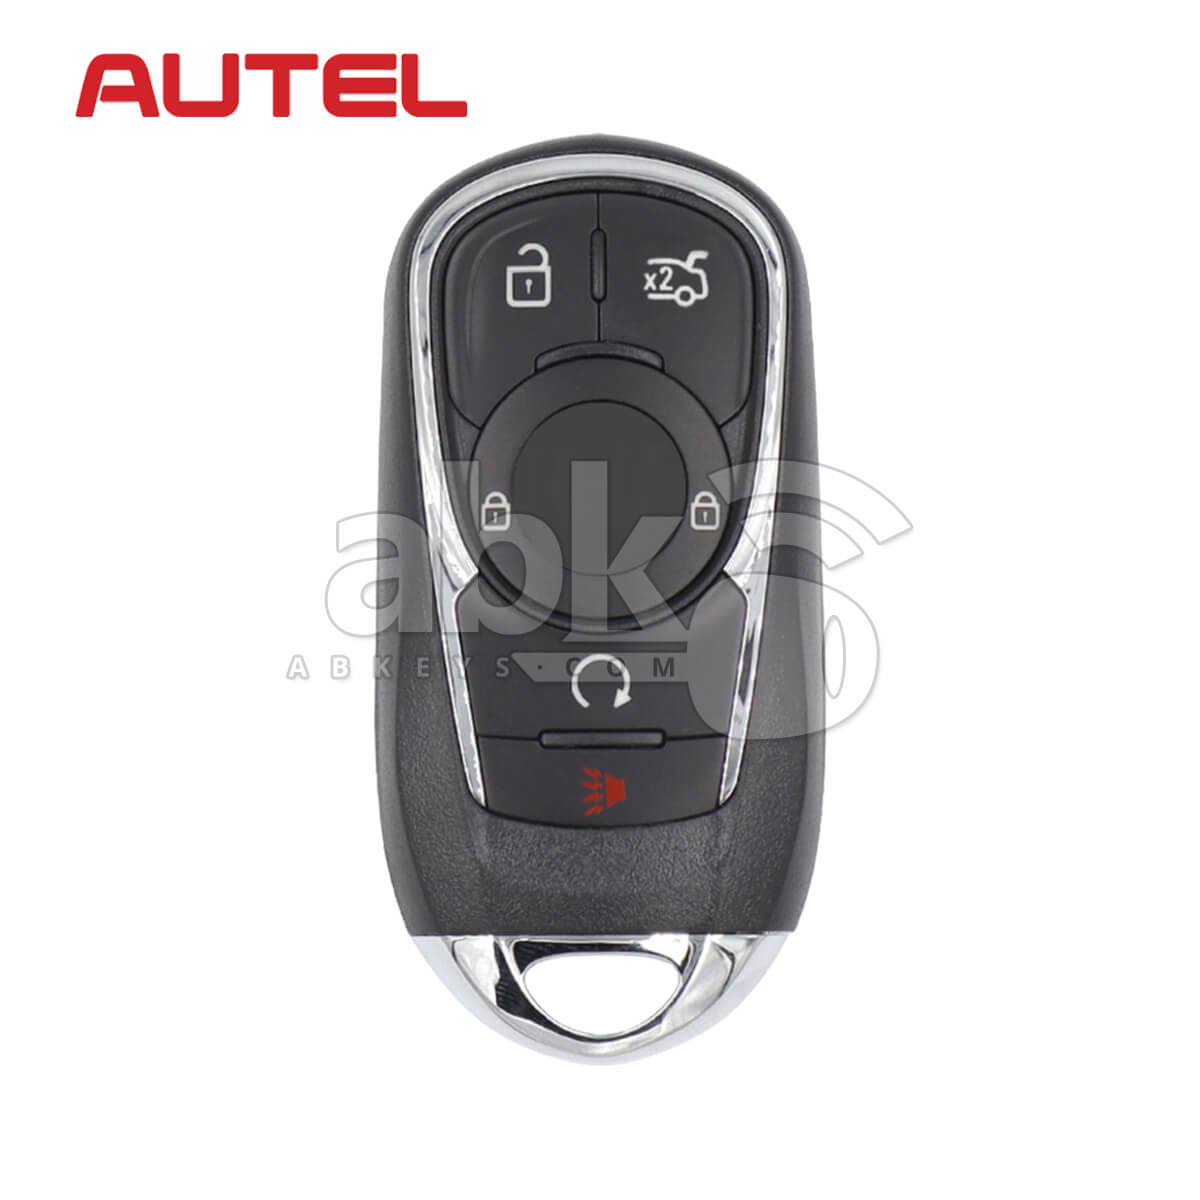 Autel Universal Smart Key 5Buttons Buick Style IKEYOL005AL - ABK-4478-IKEYOL005AL - ABKEYS.COM